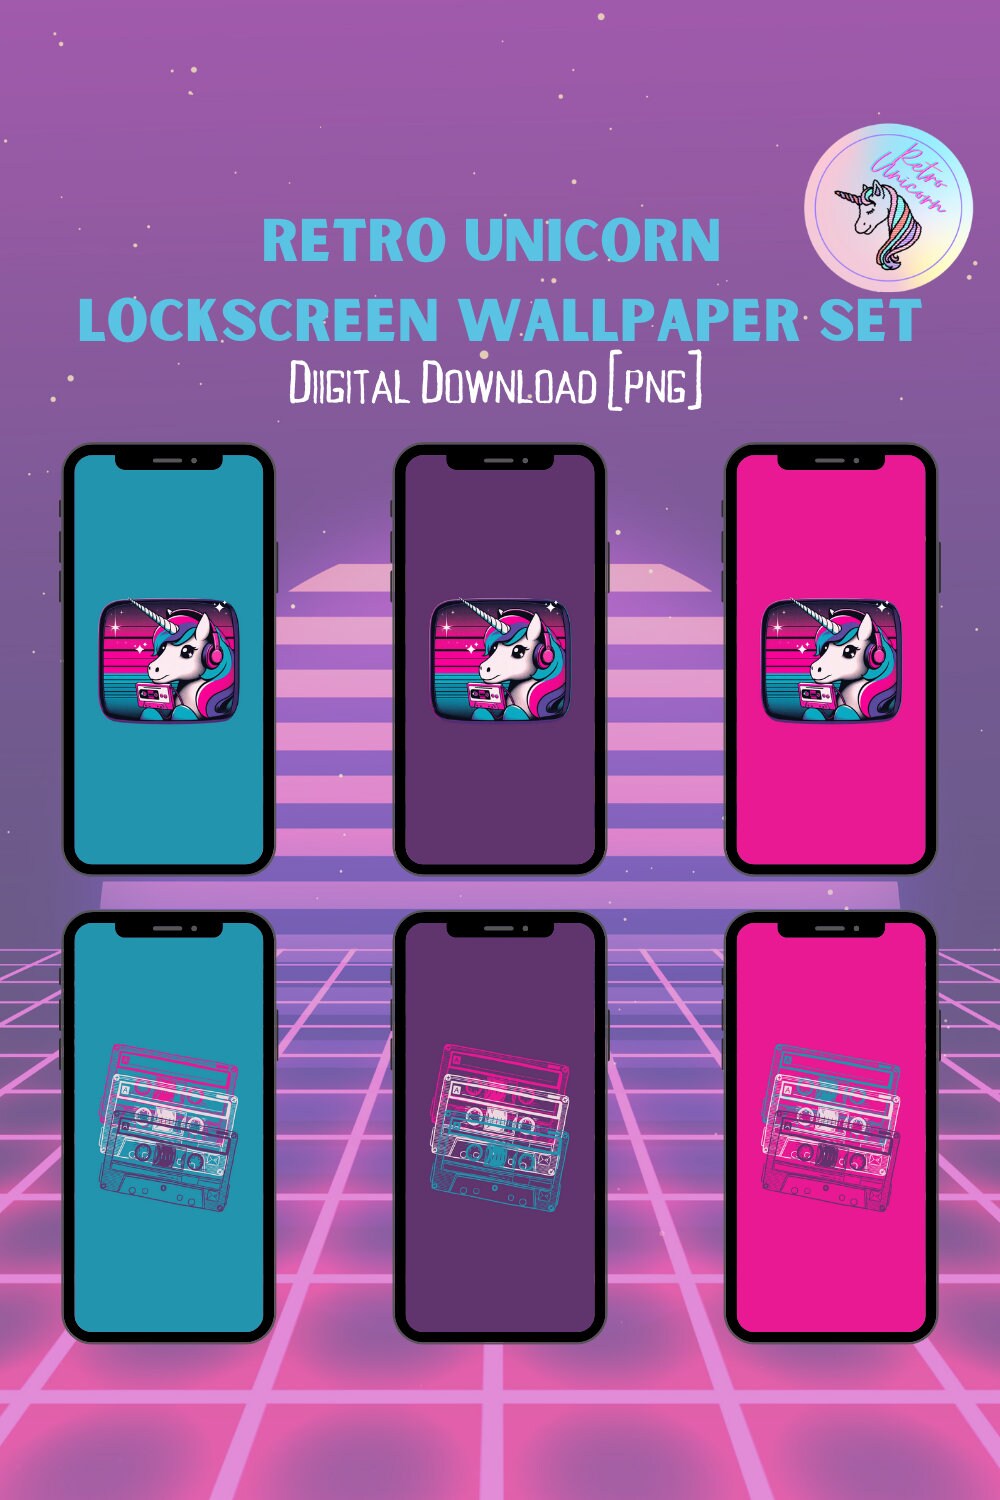 Unicorn Lockscreen Wallpaper Bundle [6], Cartoon Character, 80s PNG 90s PNG, 90s graphic, 80s aesthetic, 90s nostalgia, 80s music, 90s music